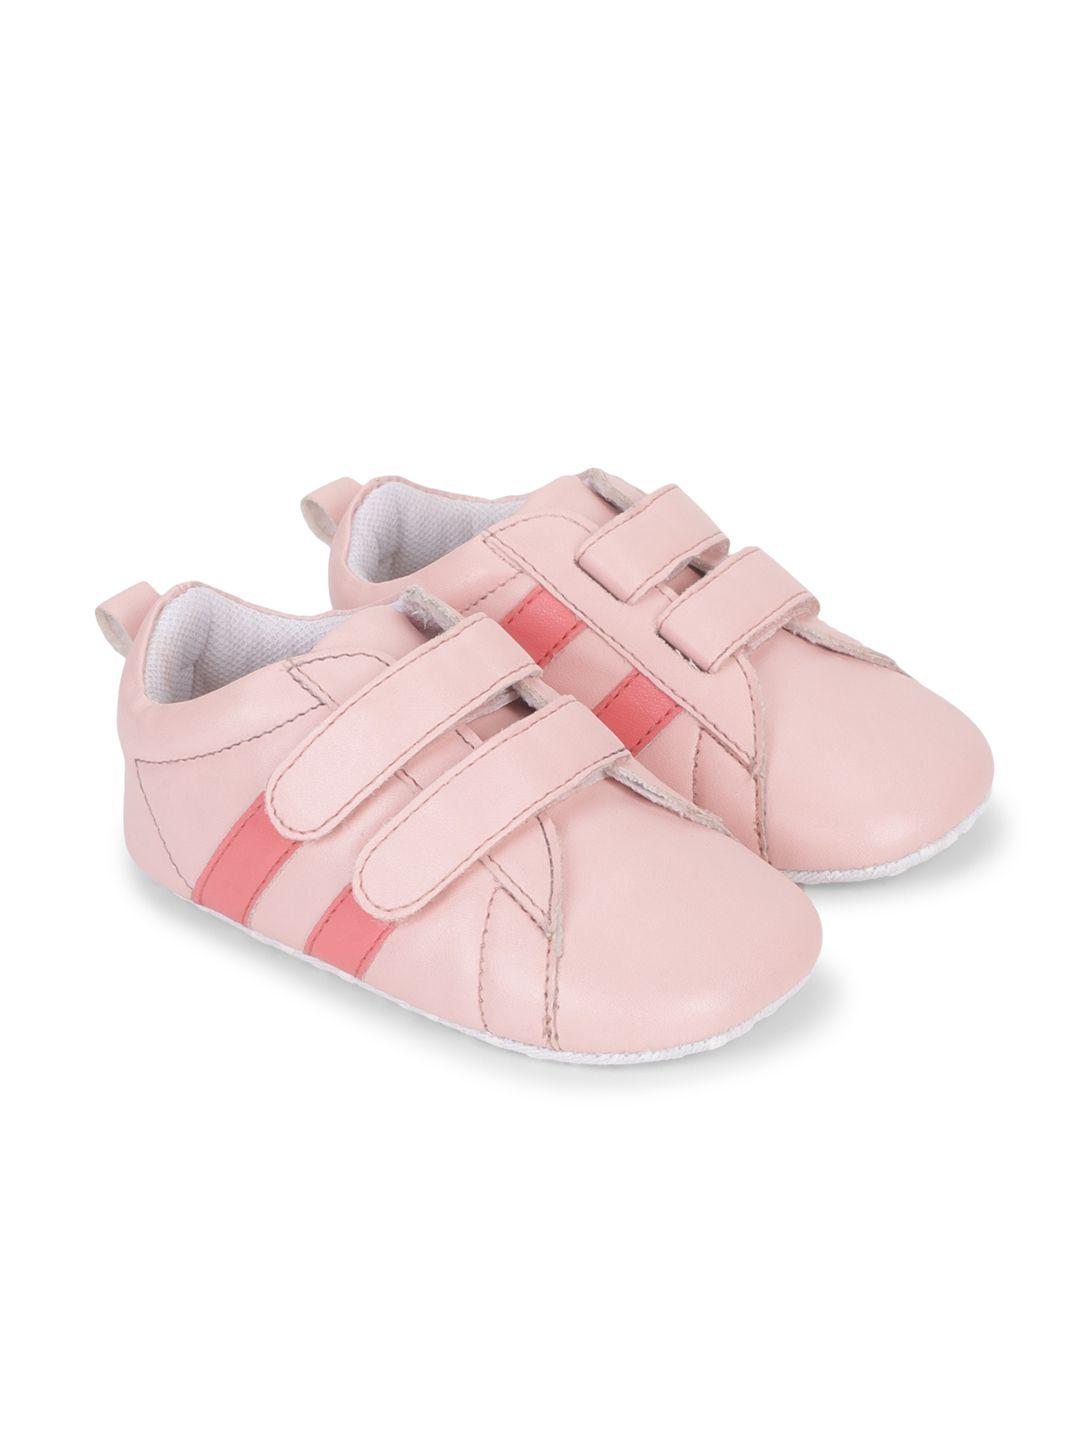 mothercare infant girls pram sneakers